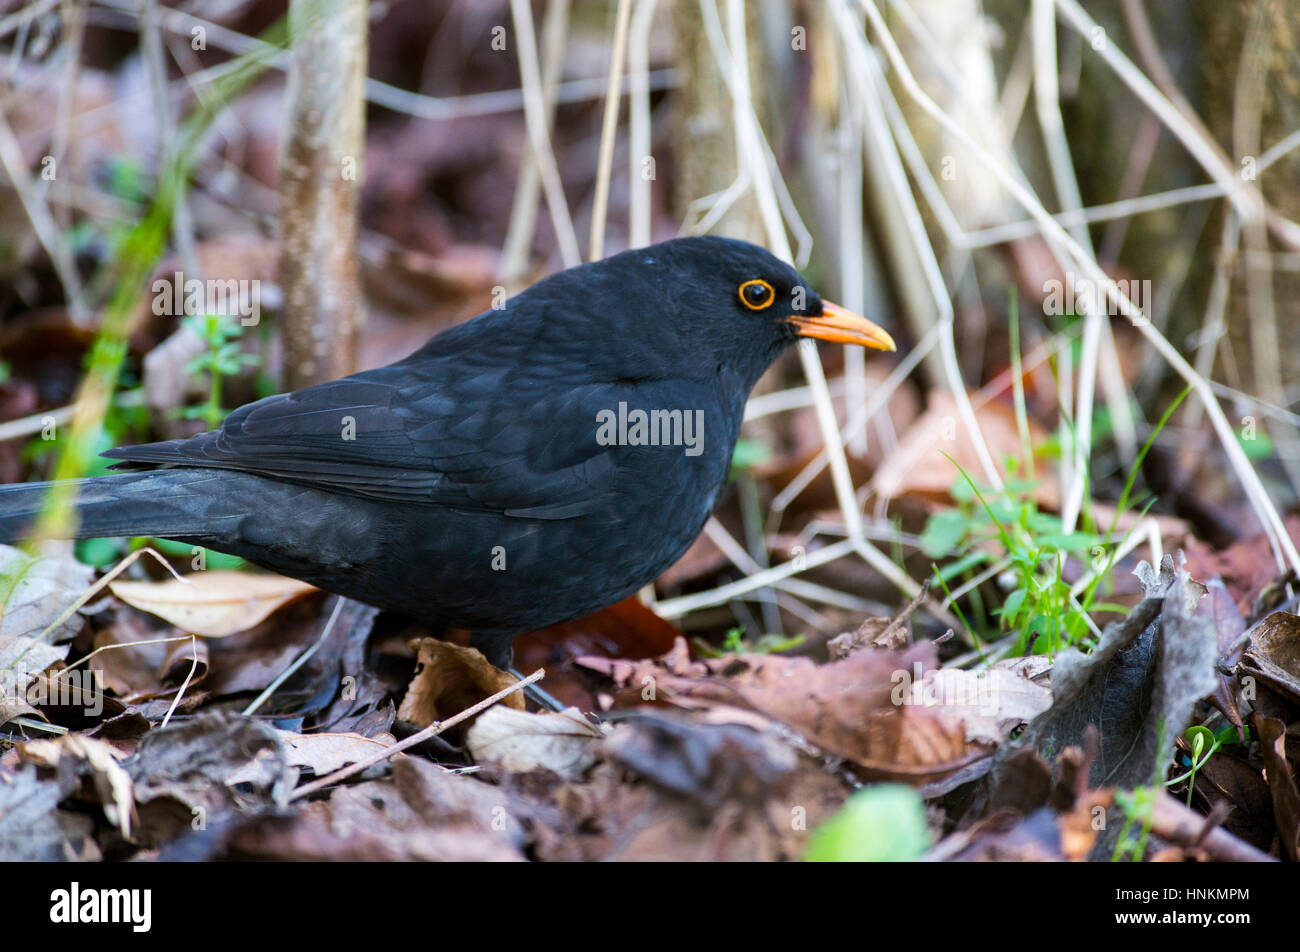 British bird a Blackbird Turdus merula foraging for food amongst winter leaves in a park Stock Photo